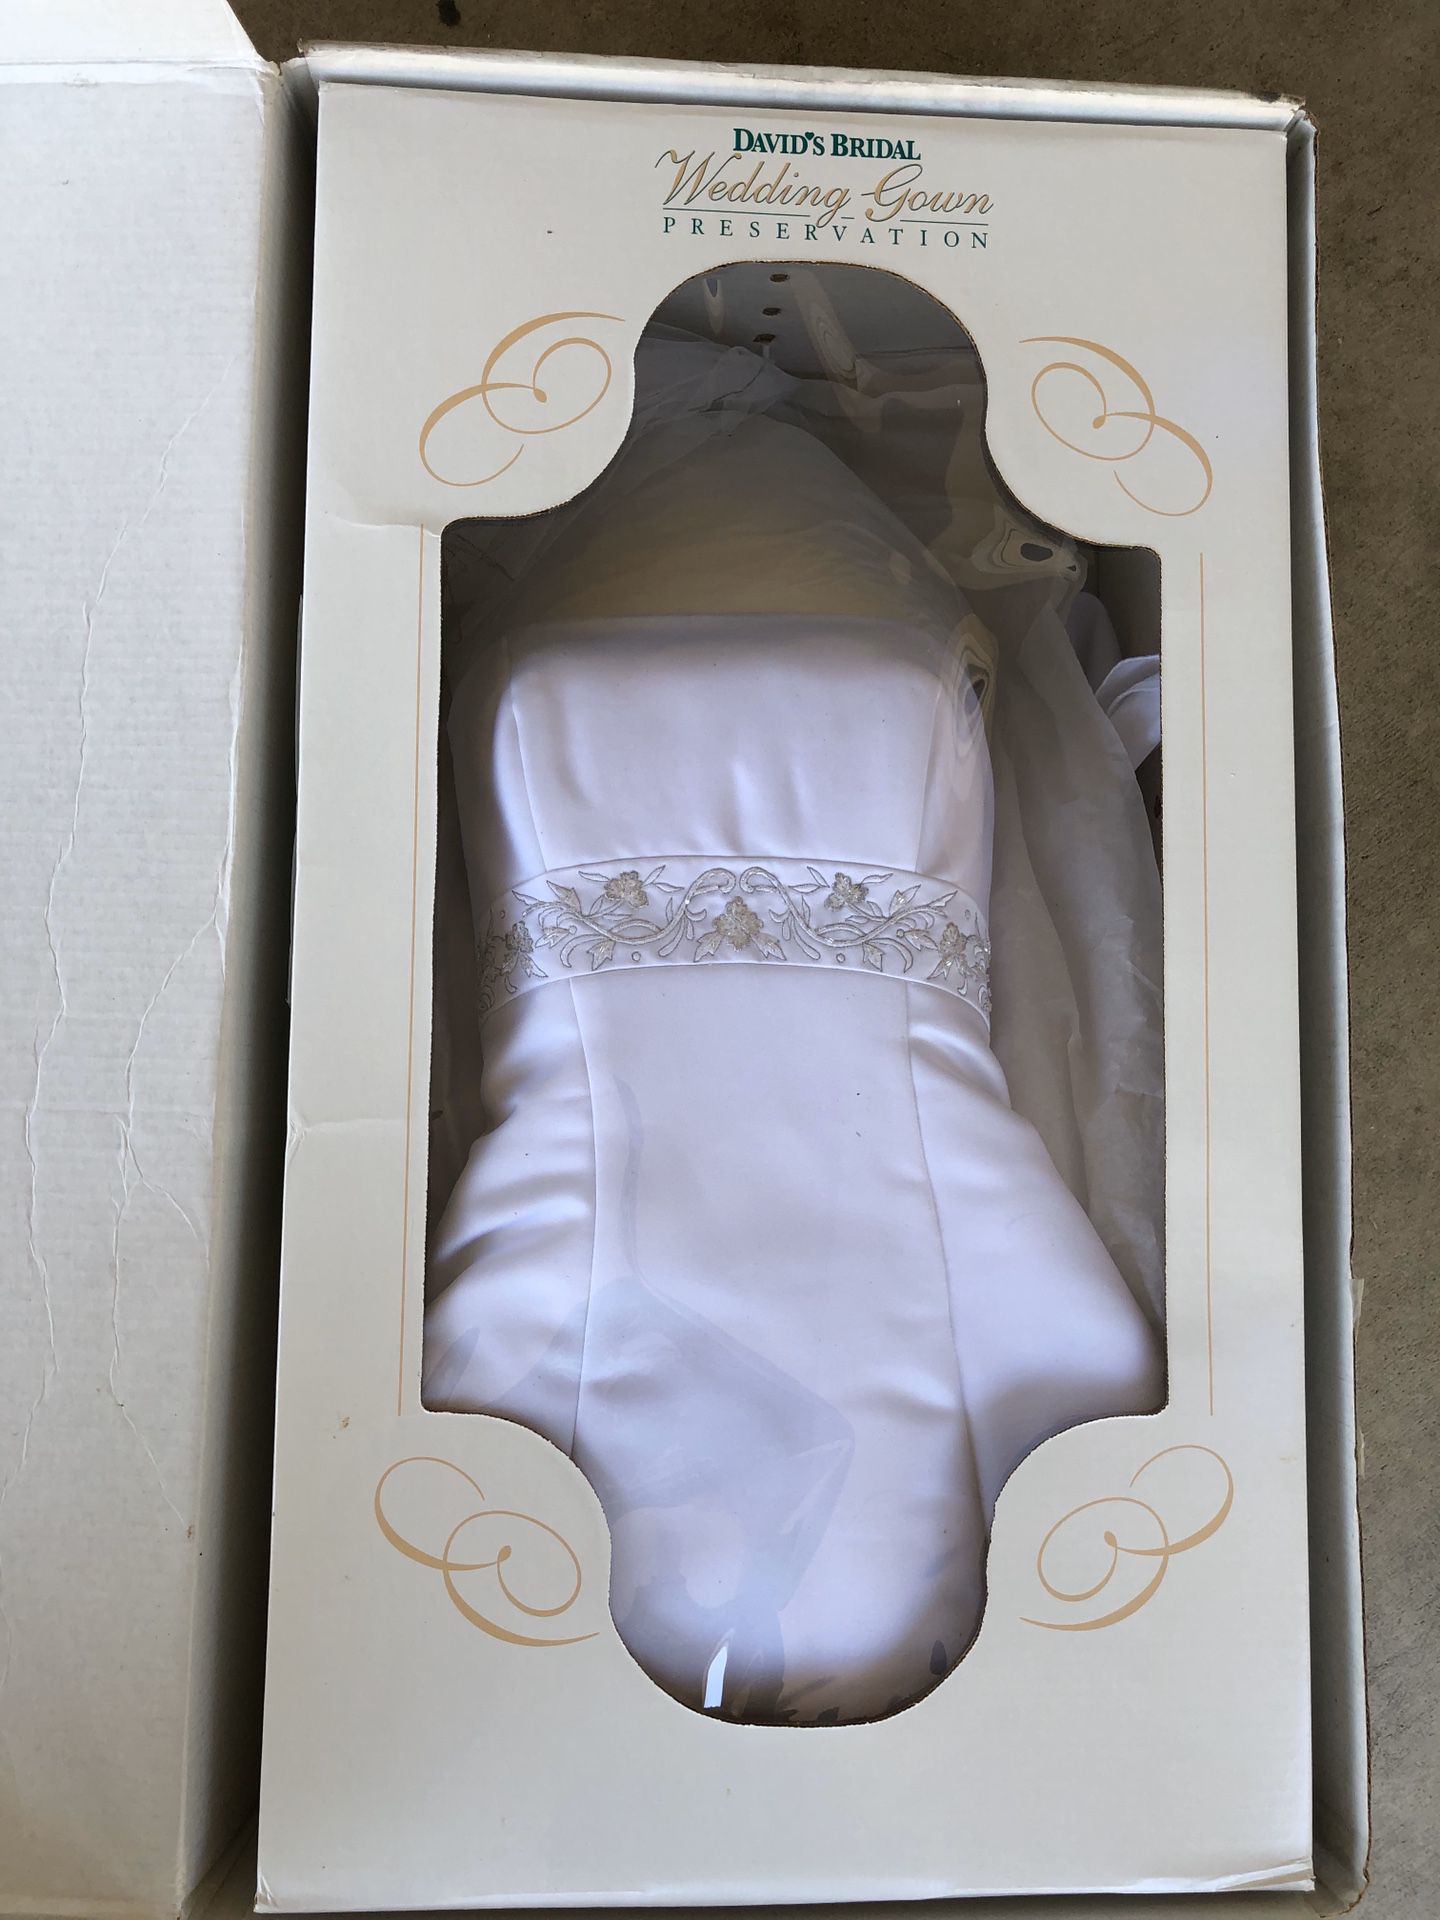 Wedding dress size 6, strapless. Preserved by David’s Bridal